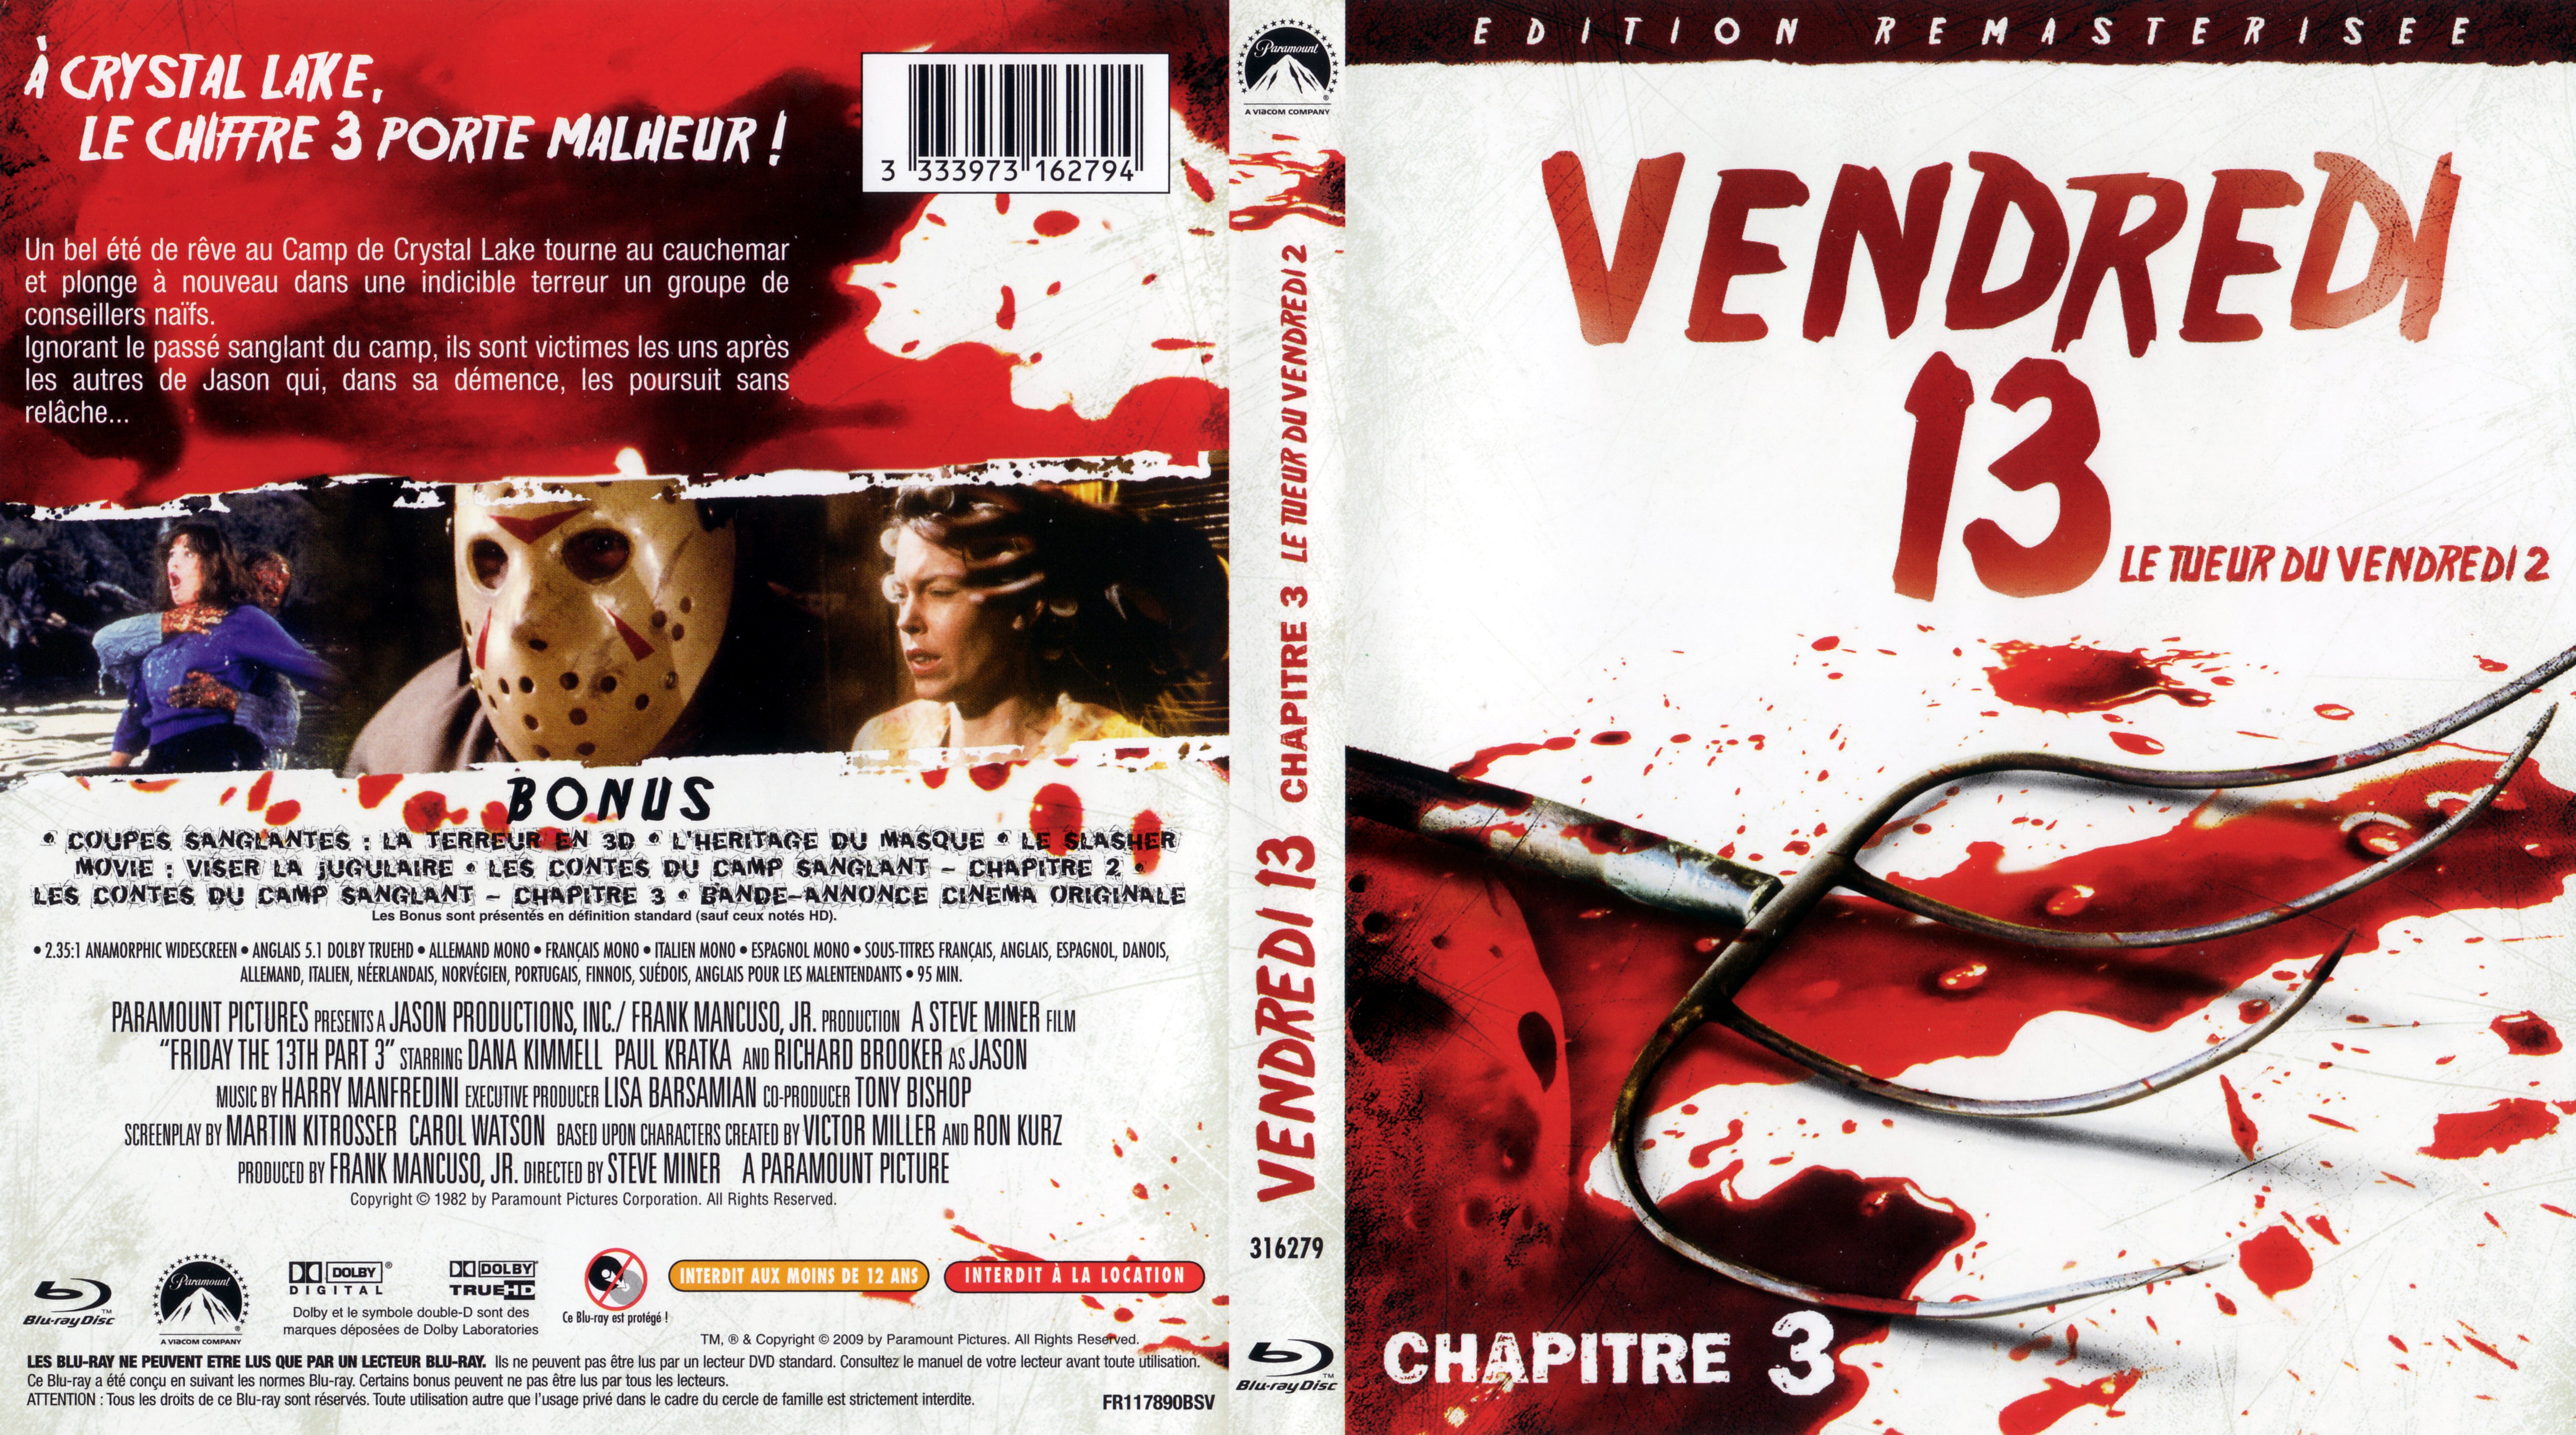 Jaquette DVD Vendredi 13 Le tueur du vendredi 2 (BLU-RAY)